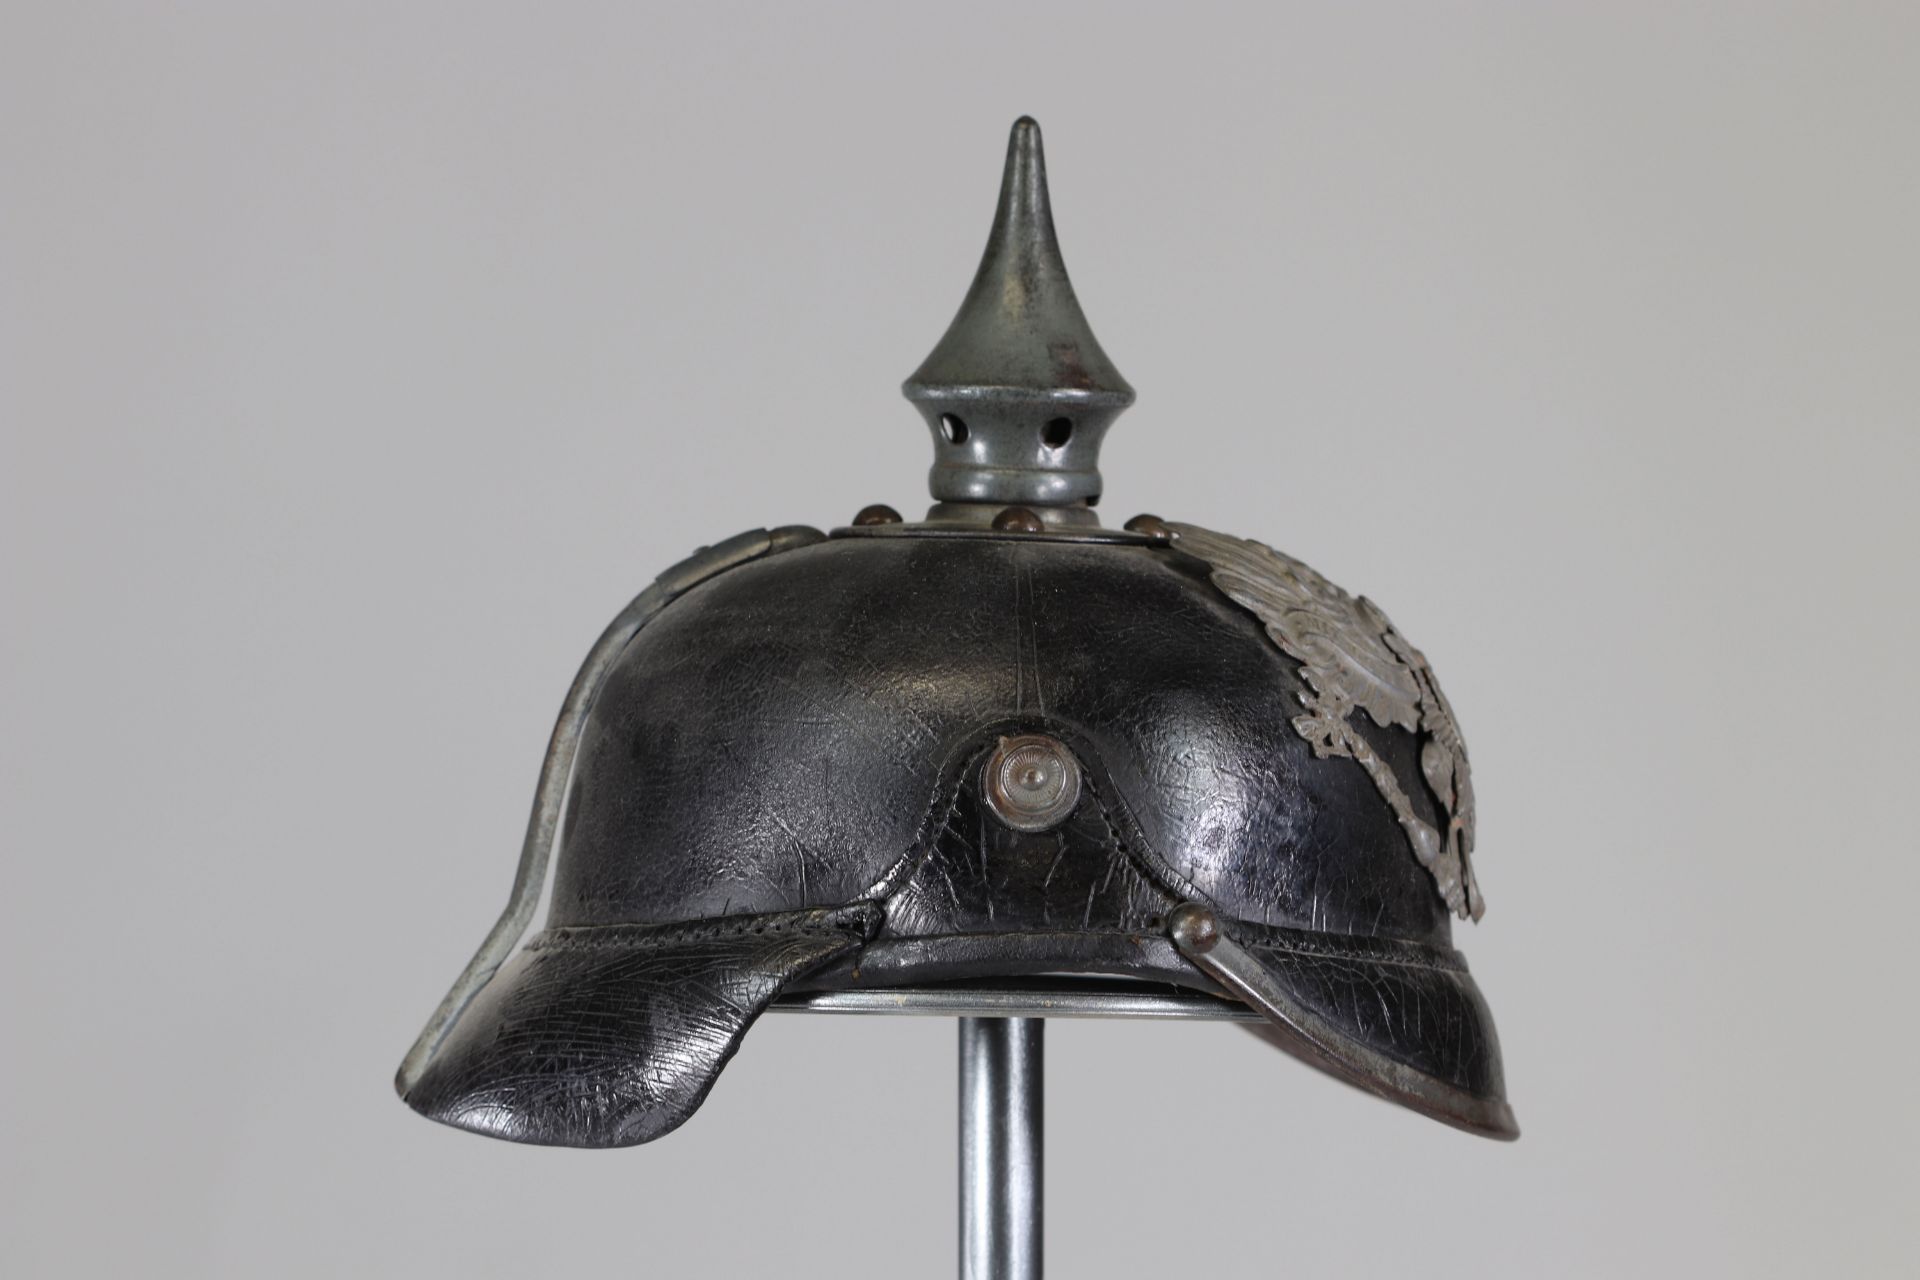 Small gray tip helmet 1917 interior cavchet number 1 + date - Image 2 of 5